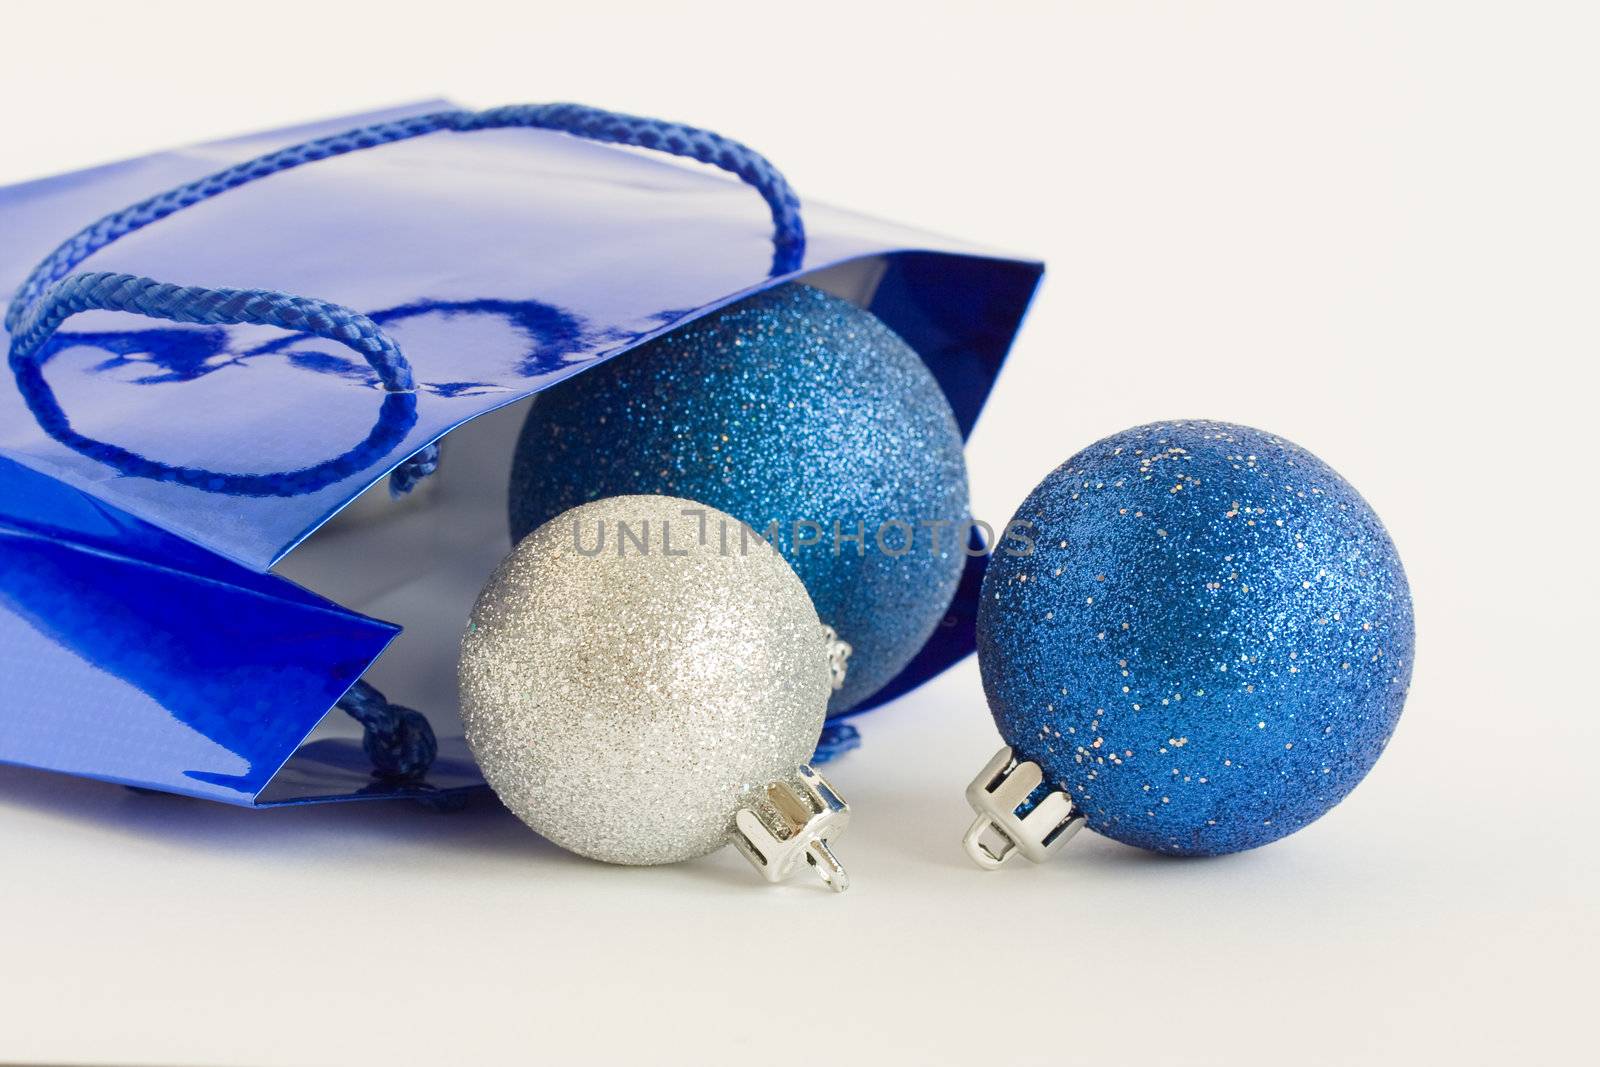 Blue bag and Christmas balls o white background